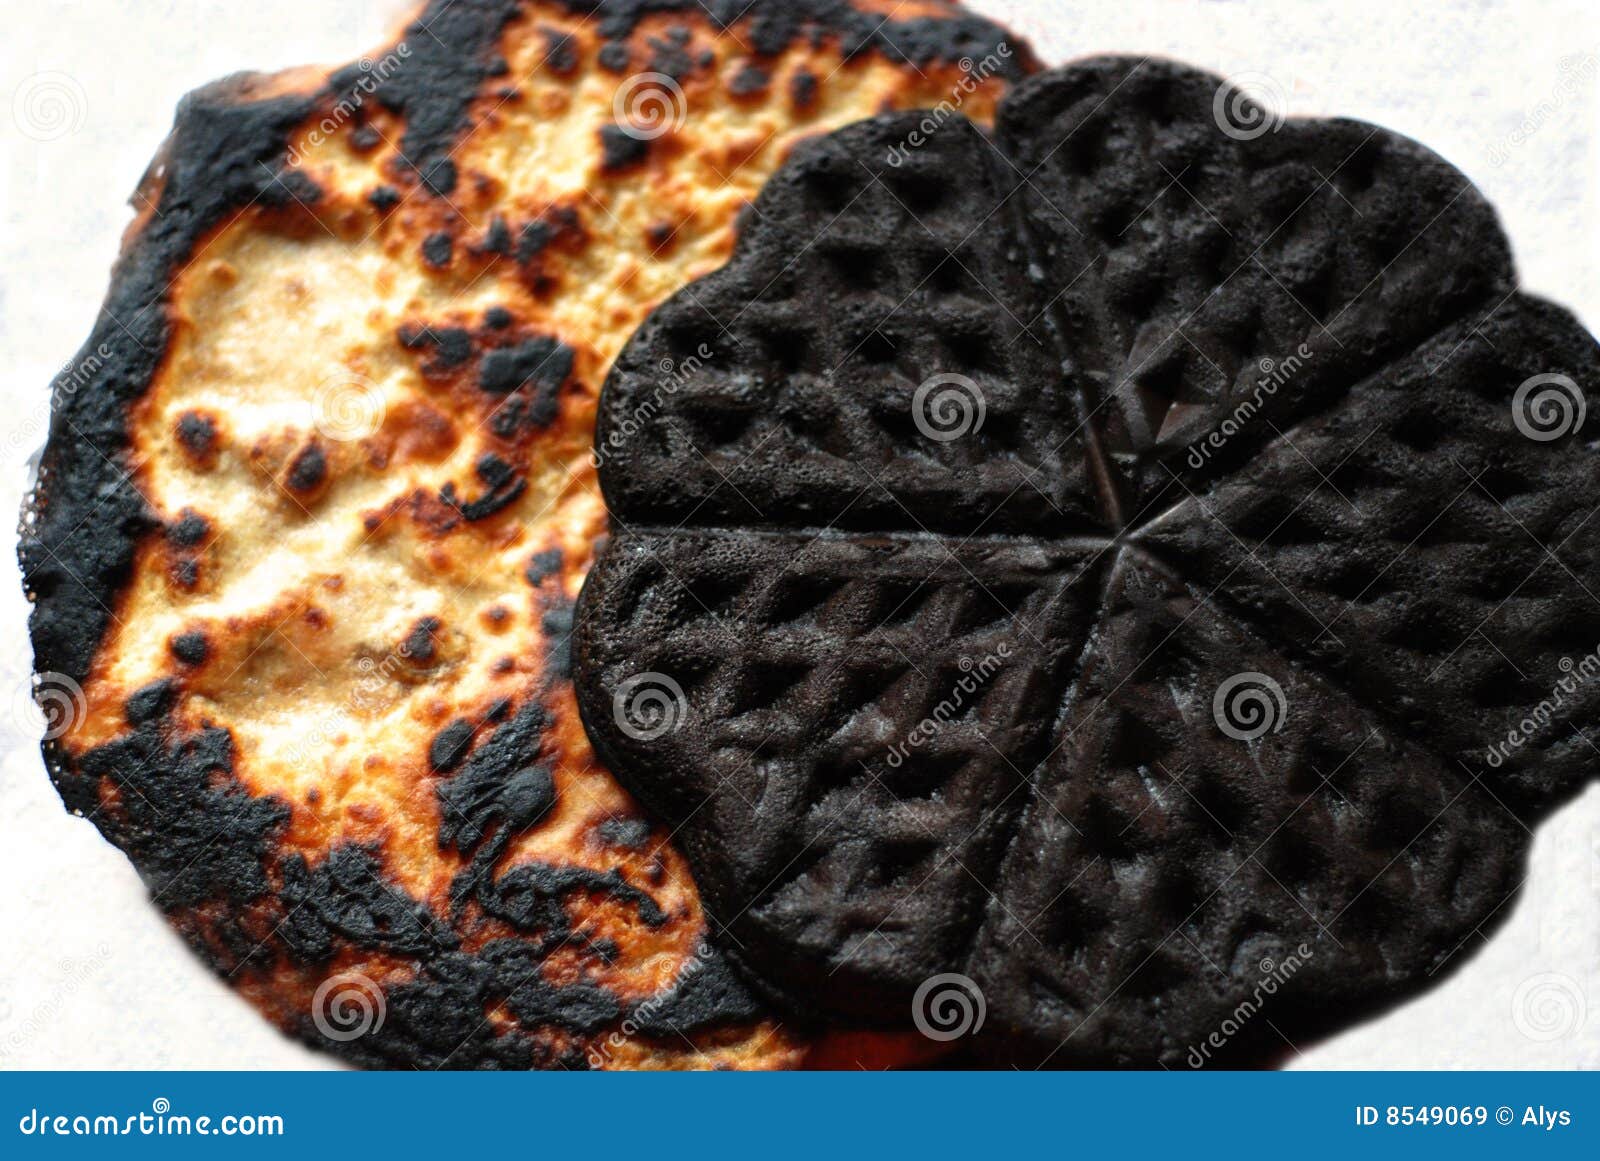 burned pancake